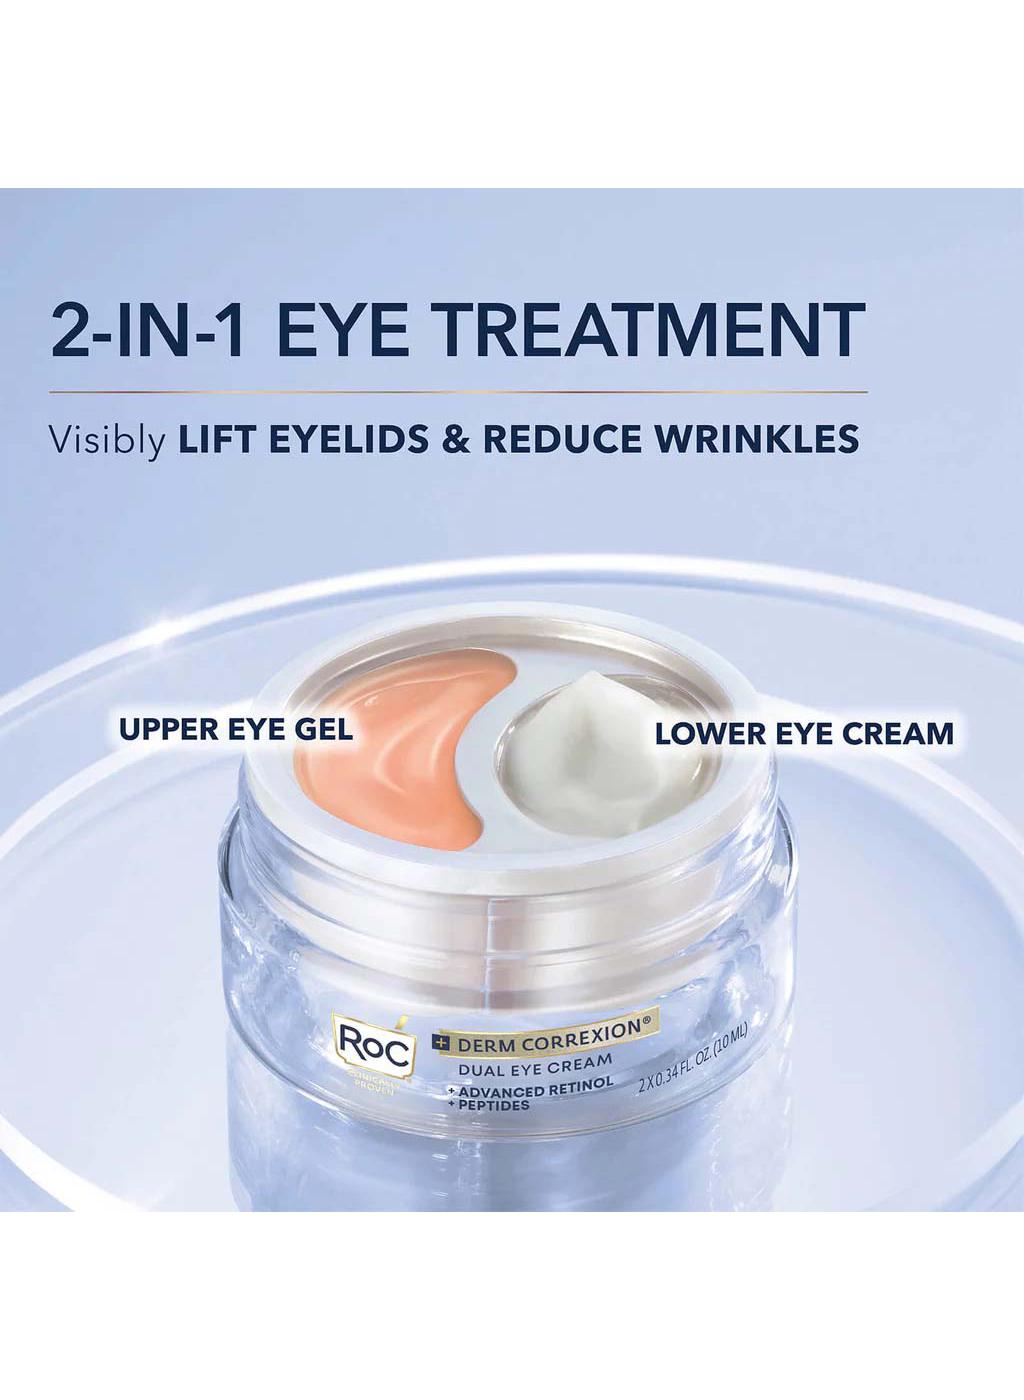 RoC Derm Correxion Dual Eye Cream; image 2 of 4